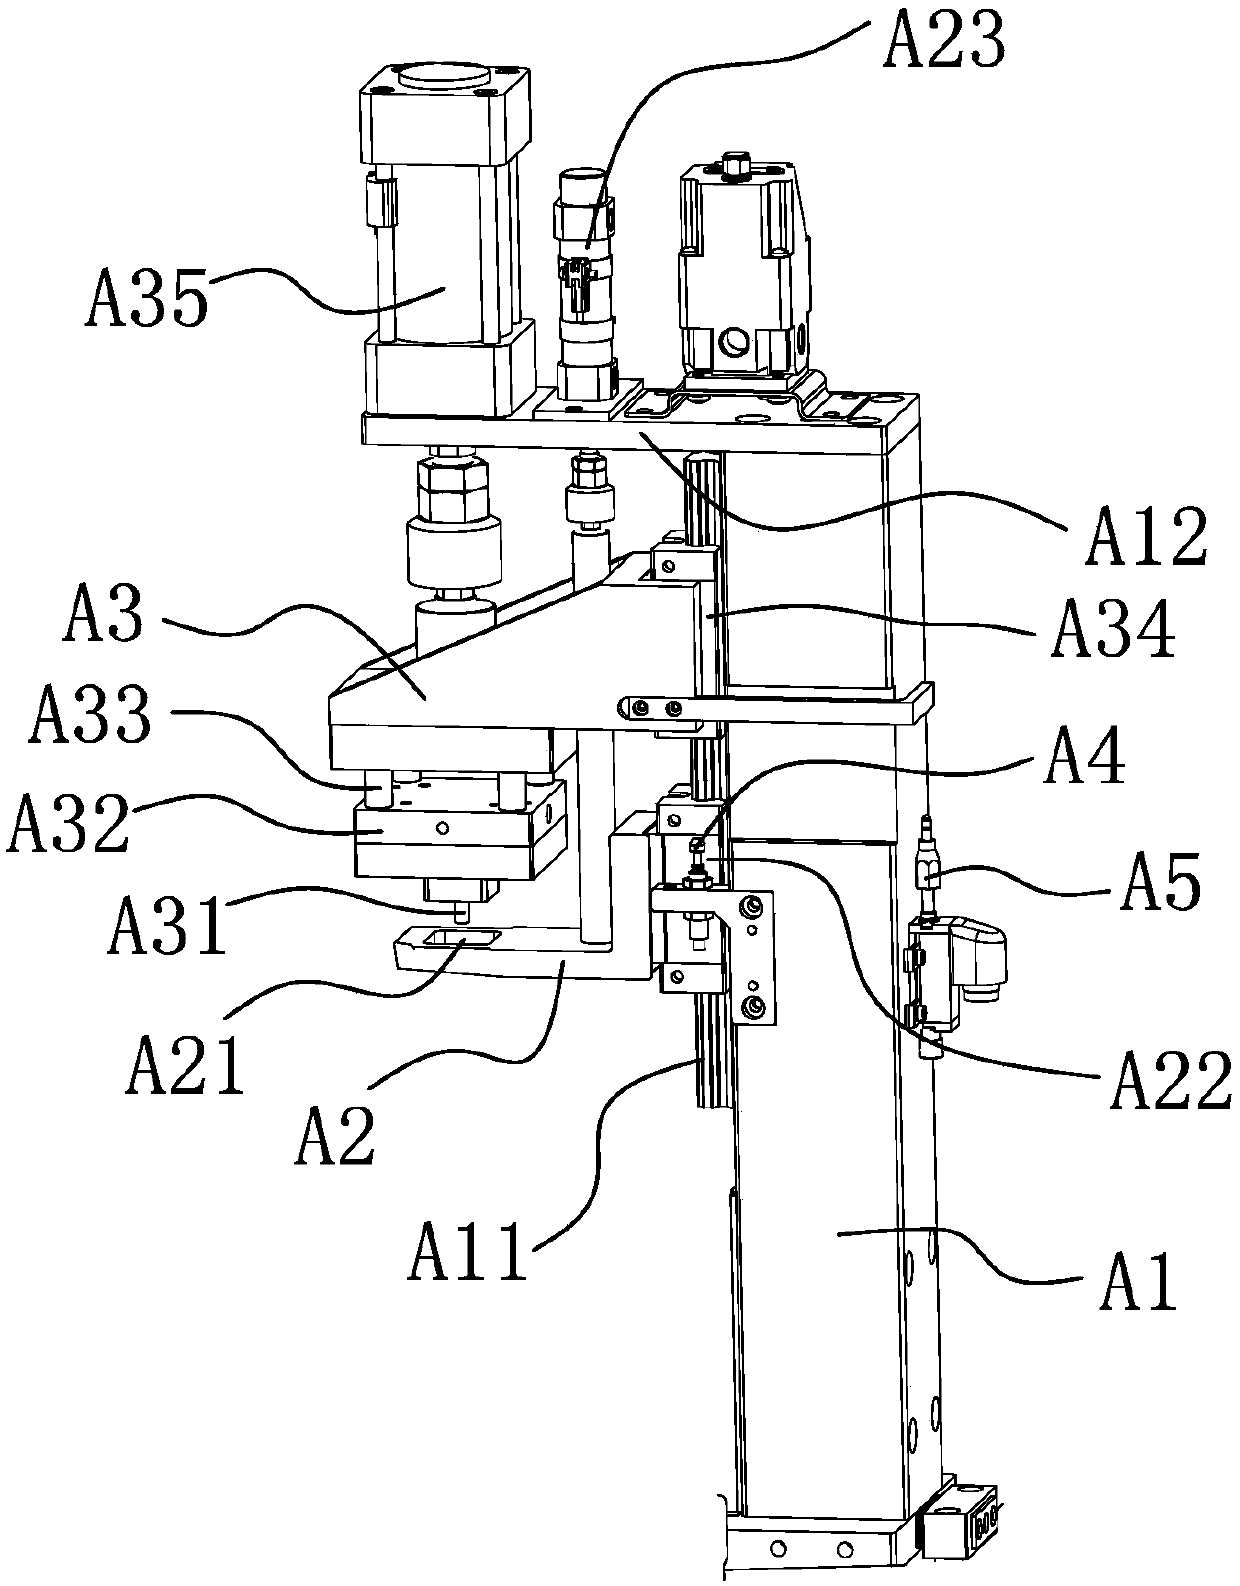 Vacuum pressure sensor assembling device and assembling method thereof